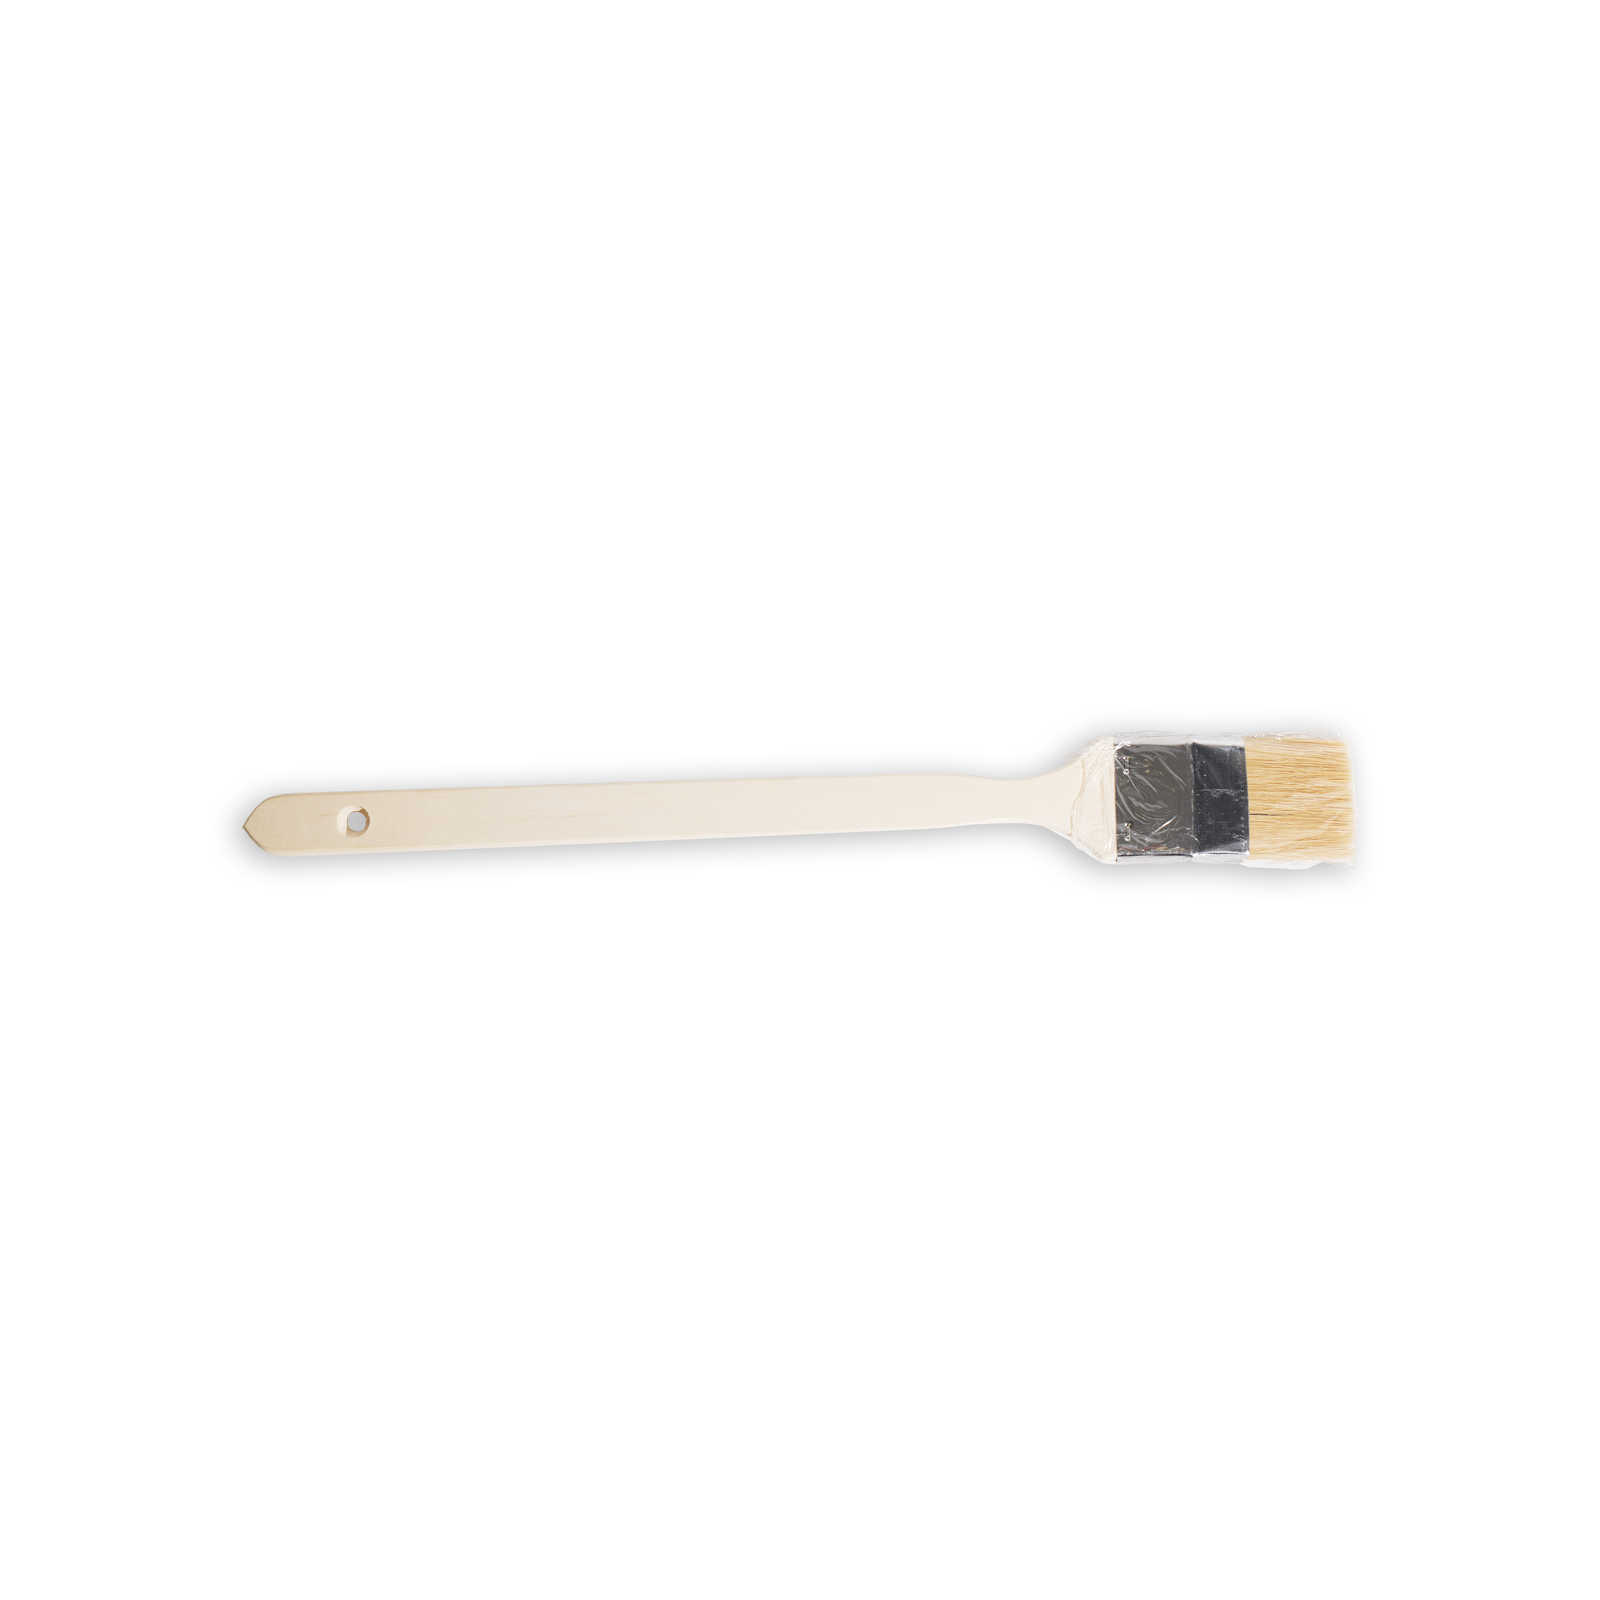         Corner brush 5cm, long wooden handle for painting work
    